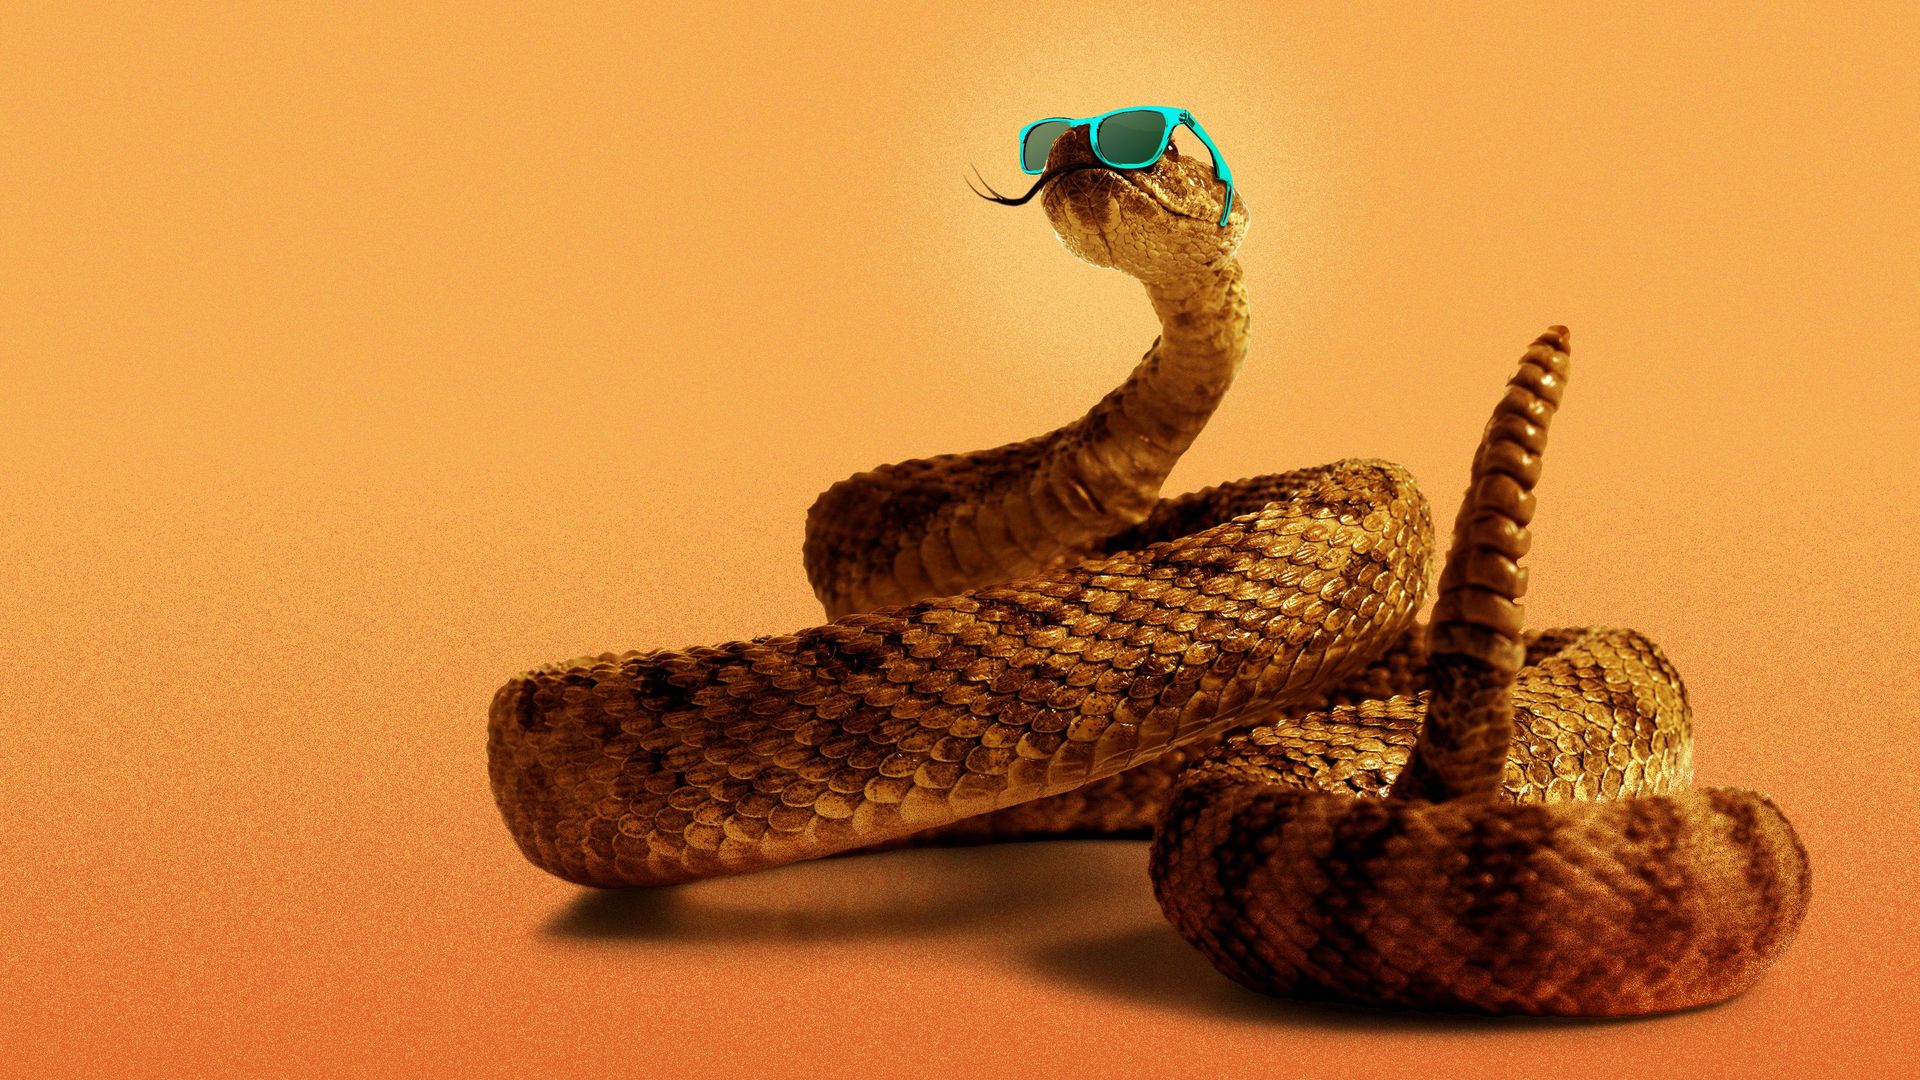 Illustration of a rattlesnake wearing sunglasses.